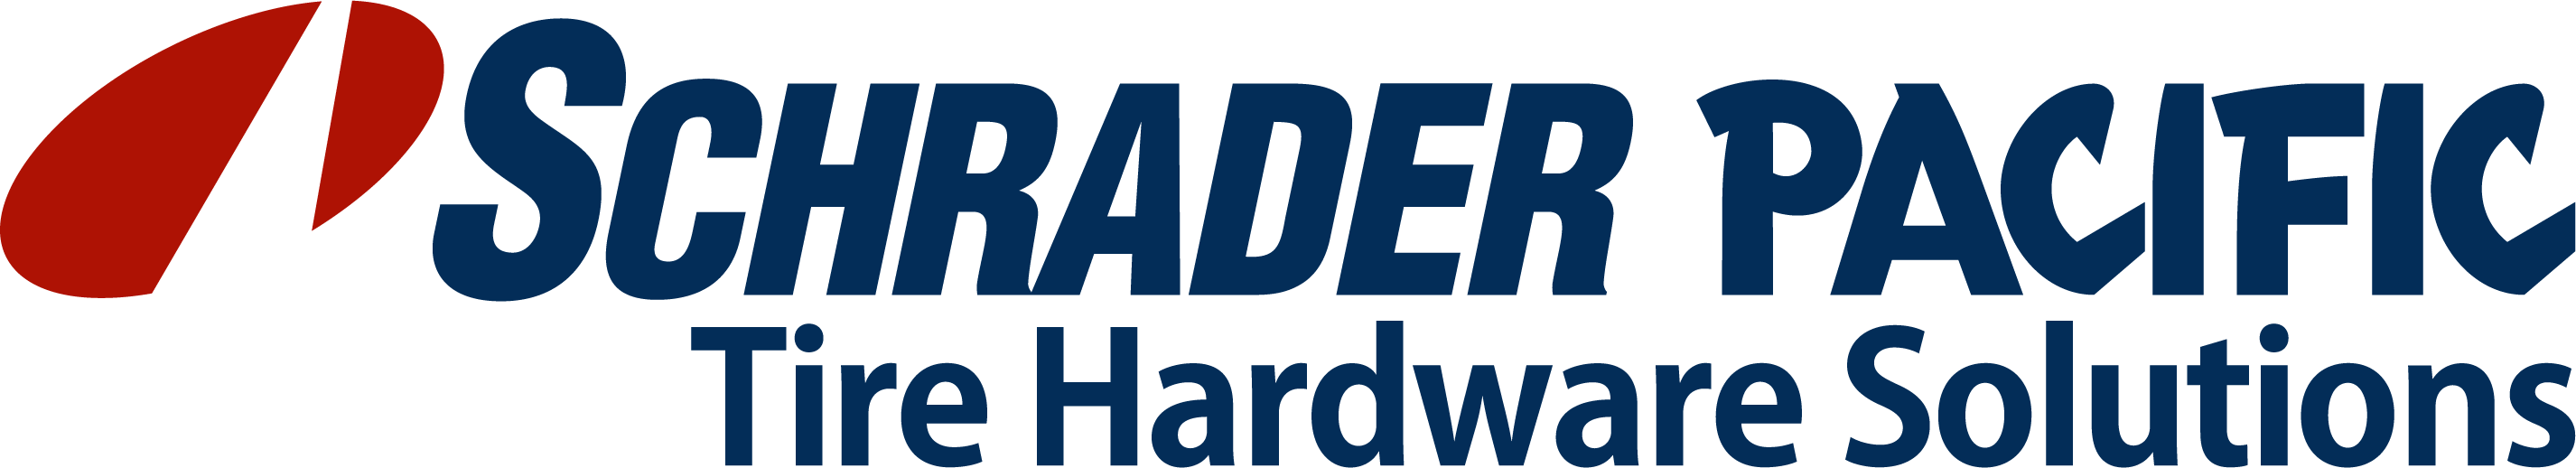 Logo de Schrader Pacific Tire Hardware Solutions